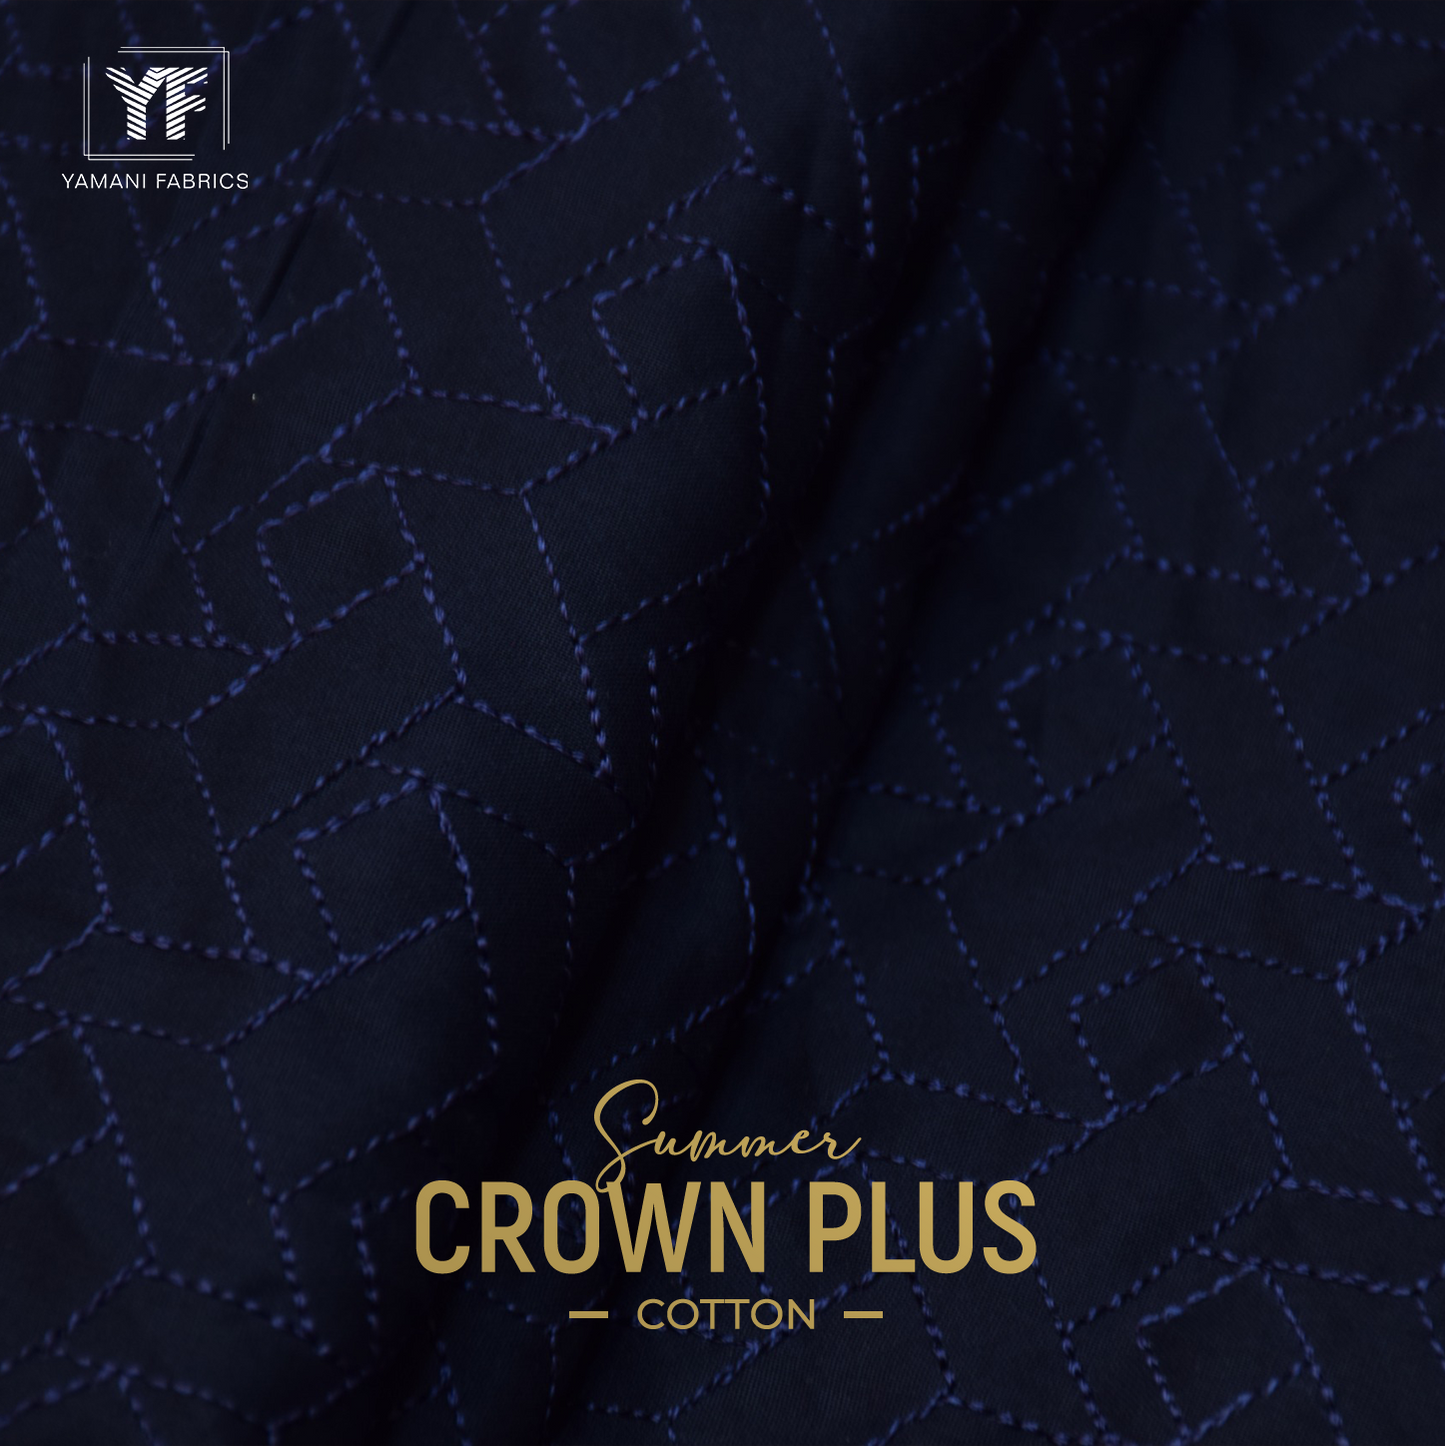 Gents Unstitched Cotton Embroidery Suit (summer Crown Plus 05) navy blue